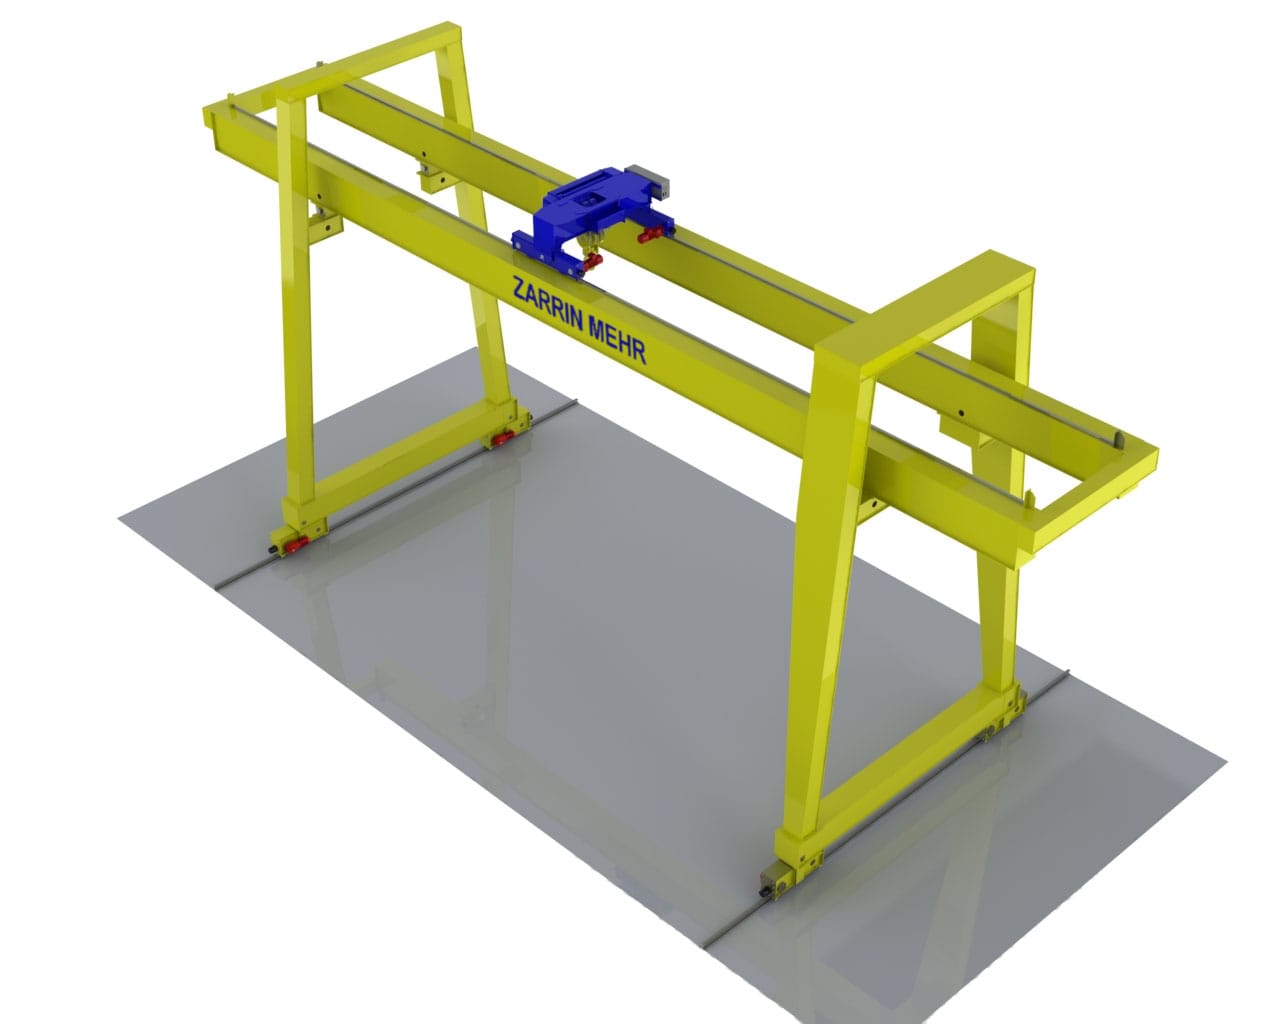 3D model of ZARRIN MEHR's Double Girder Gantry Crane, designed for handling heavy loads in demanding industrial environments.